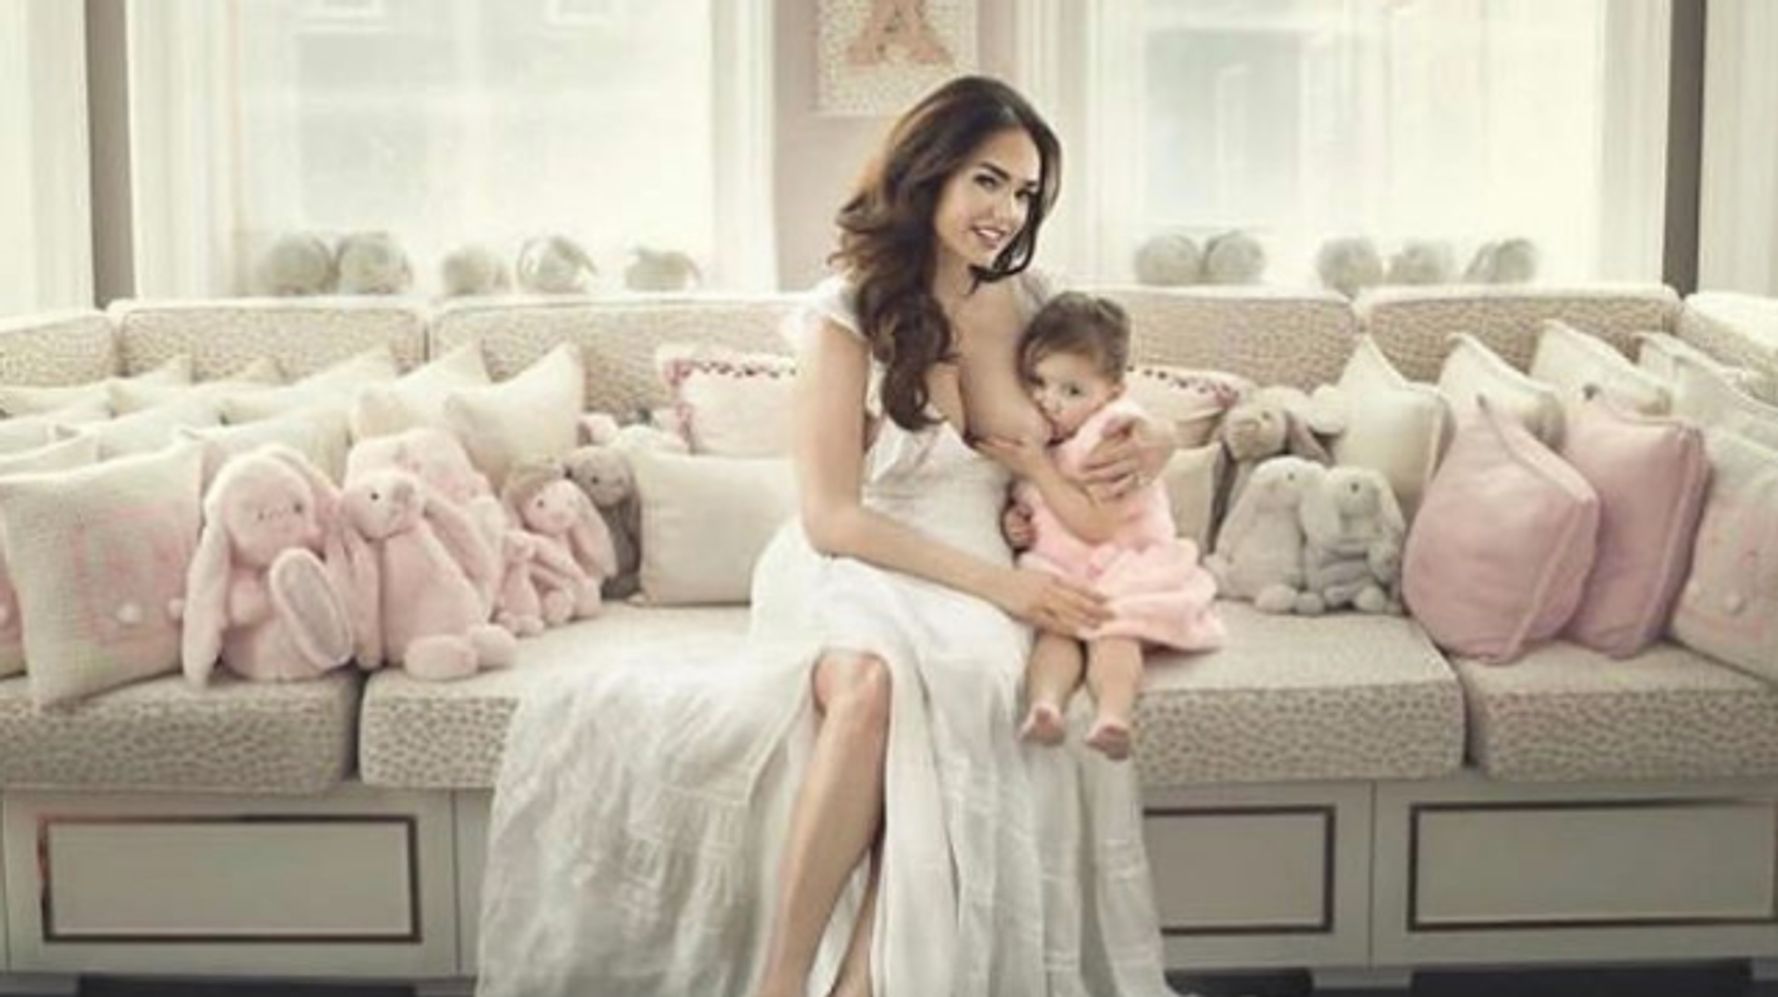 Tamara Ecclestone Shares Breastfeeding Photo With Daughter As A